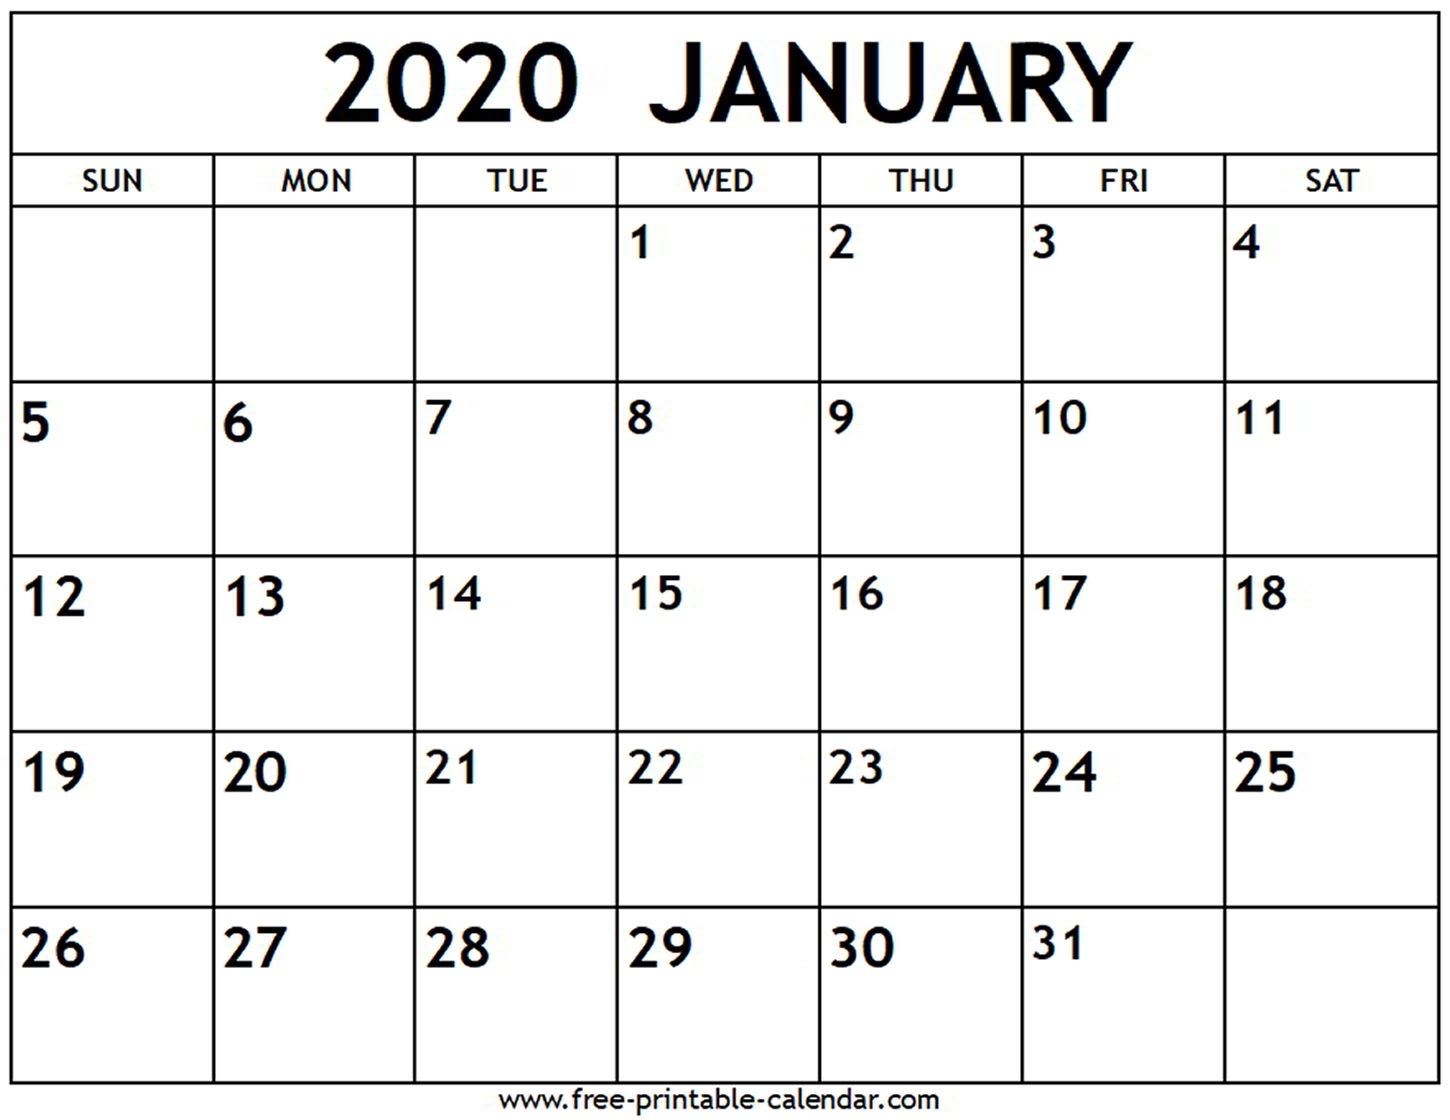 January 2020 Calendar - Free-Printable-Calendar Canada January 2020 Printable Calendar